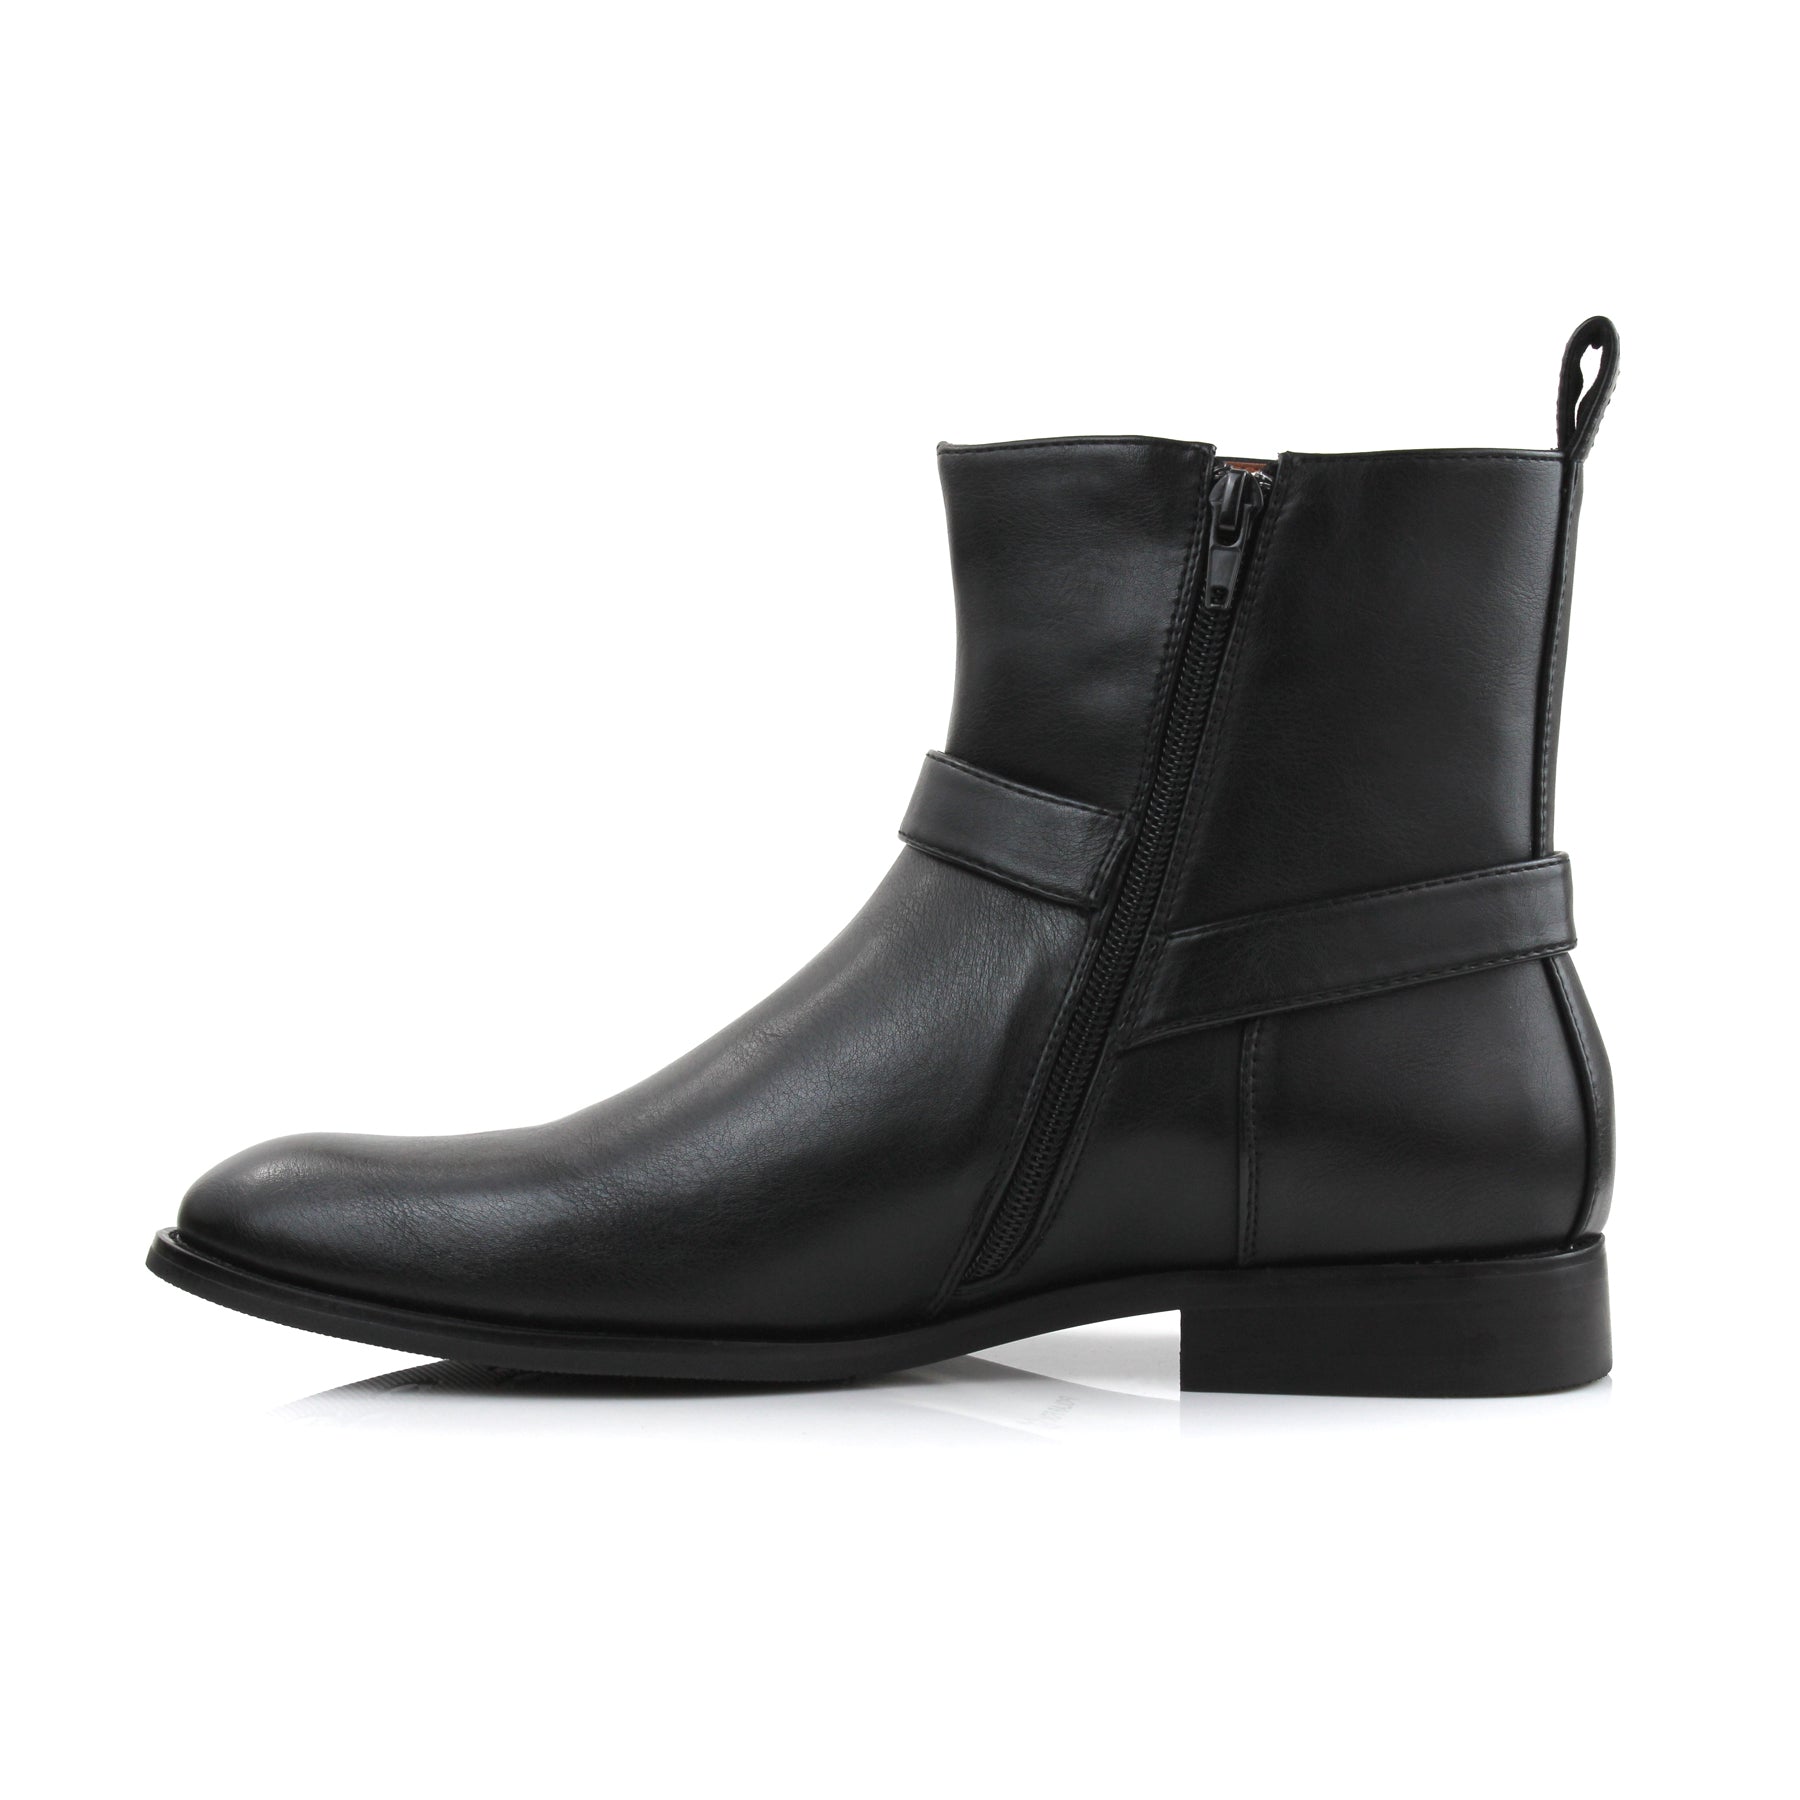 Modern Western Ankle Boots | Rhett by Polar Fox | Conal Footwear | Inner Side Angle View